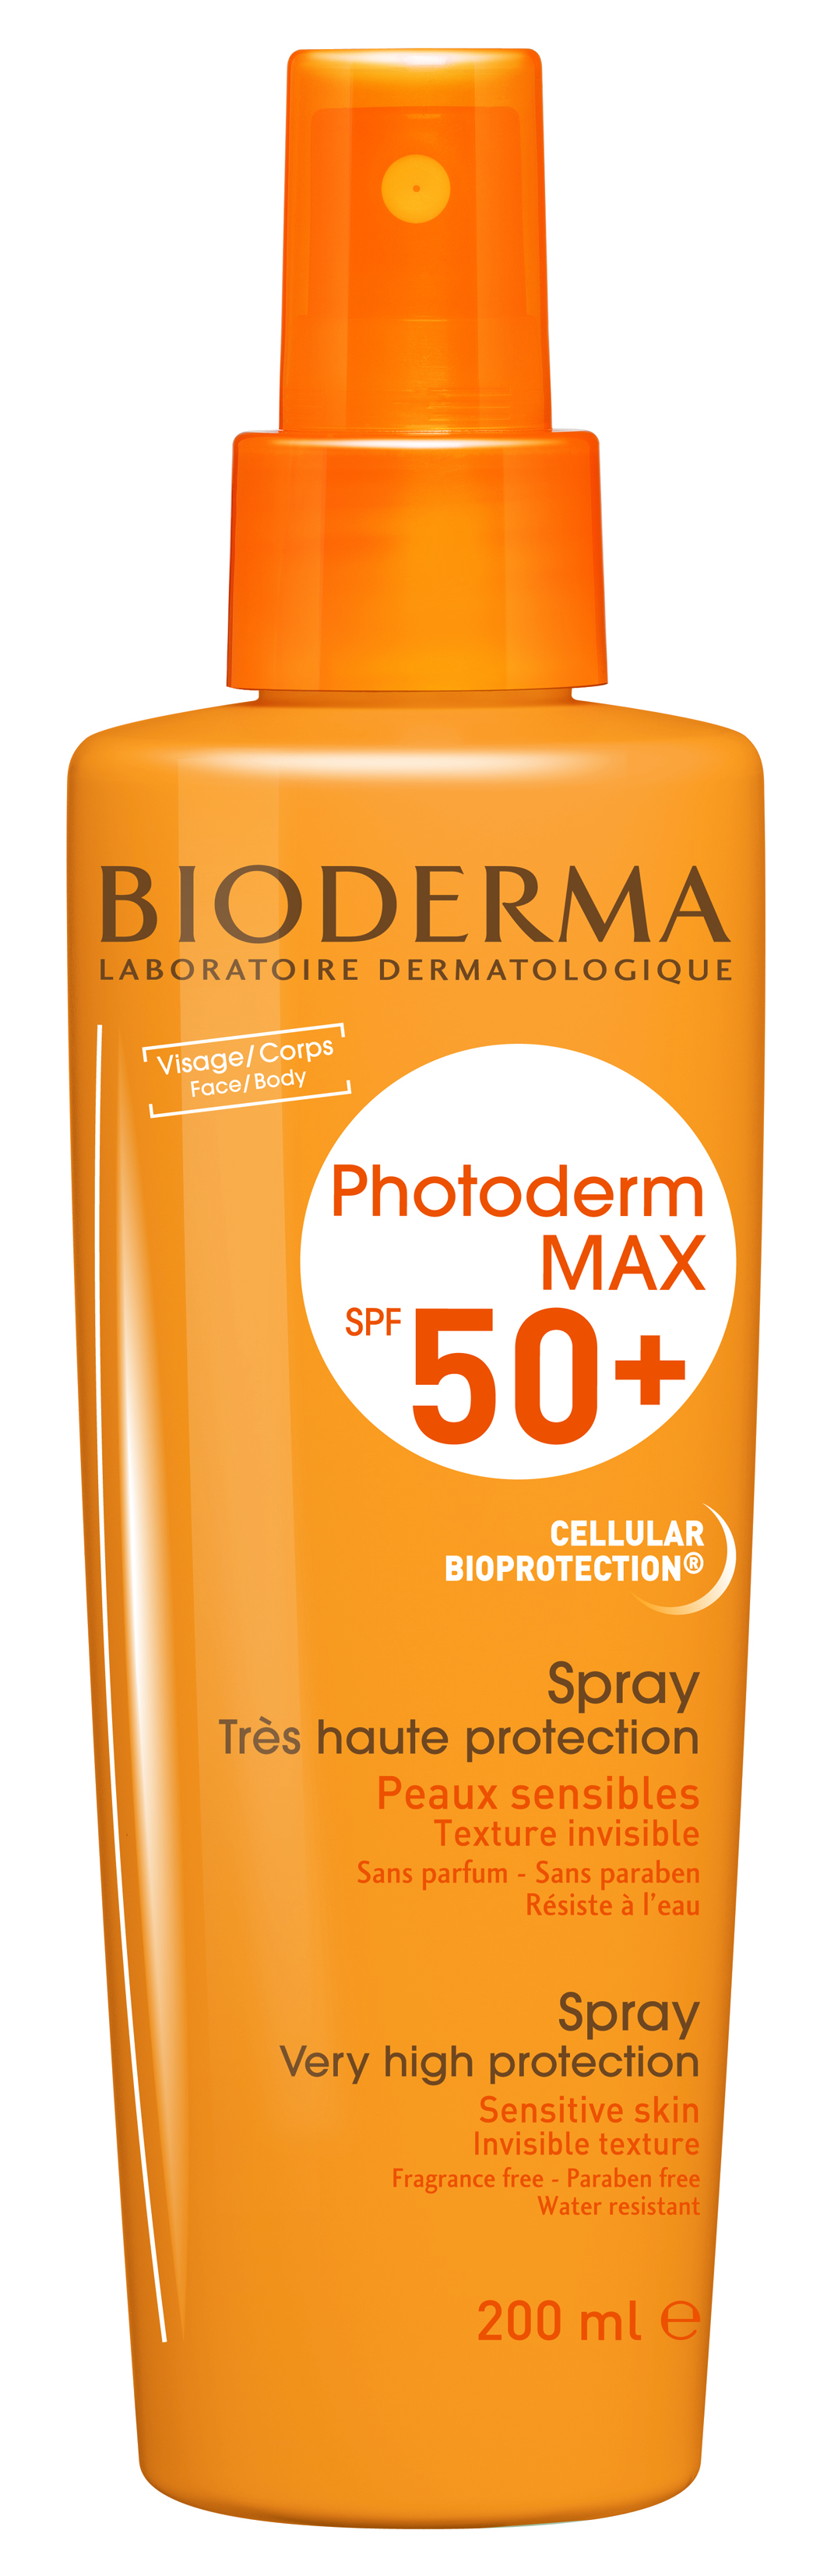 BIODERMA PHOTODERM MAX SPRAY SPF50+ 200ML Bioderma